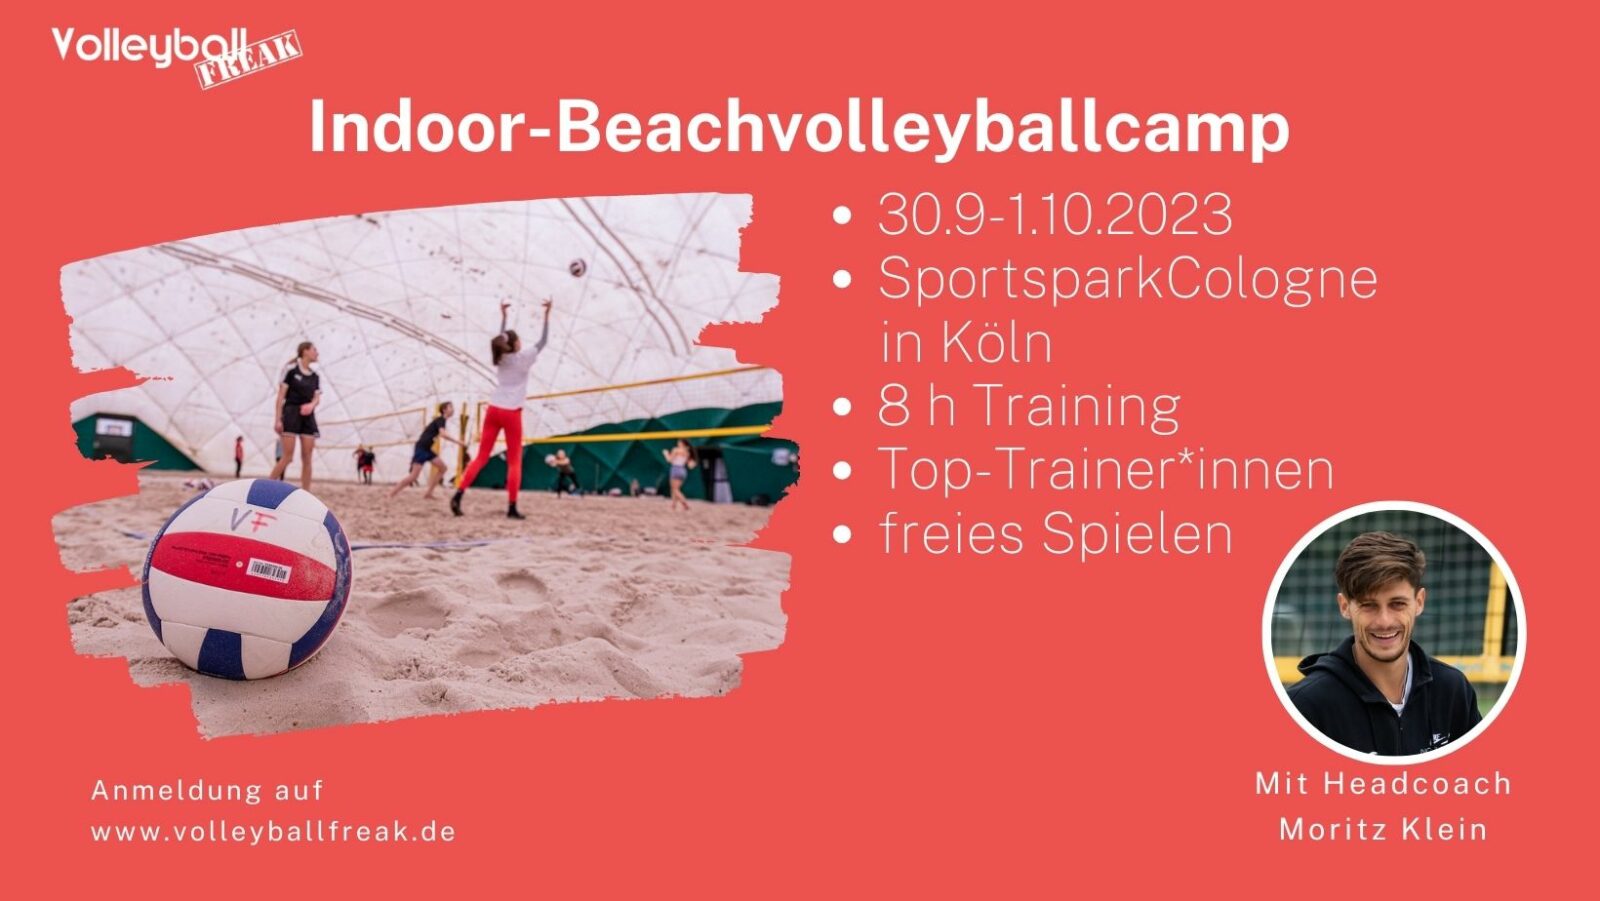 Indoor-Beachvolleyballcamp 30.9.-1.10.2023 in Köln